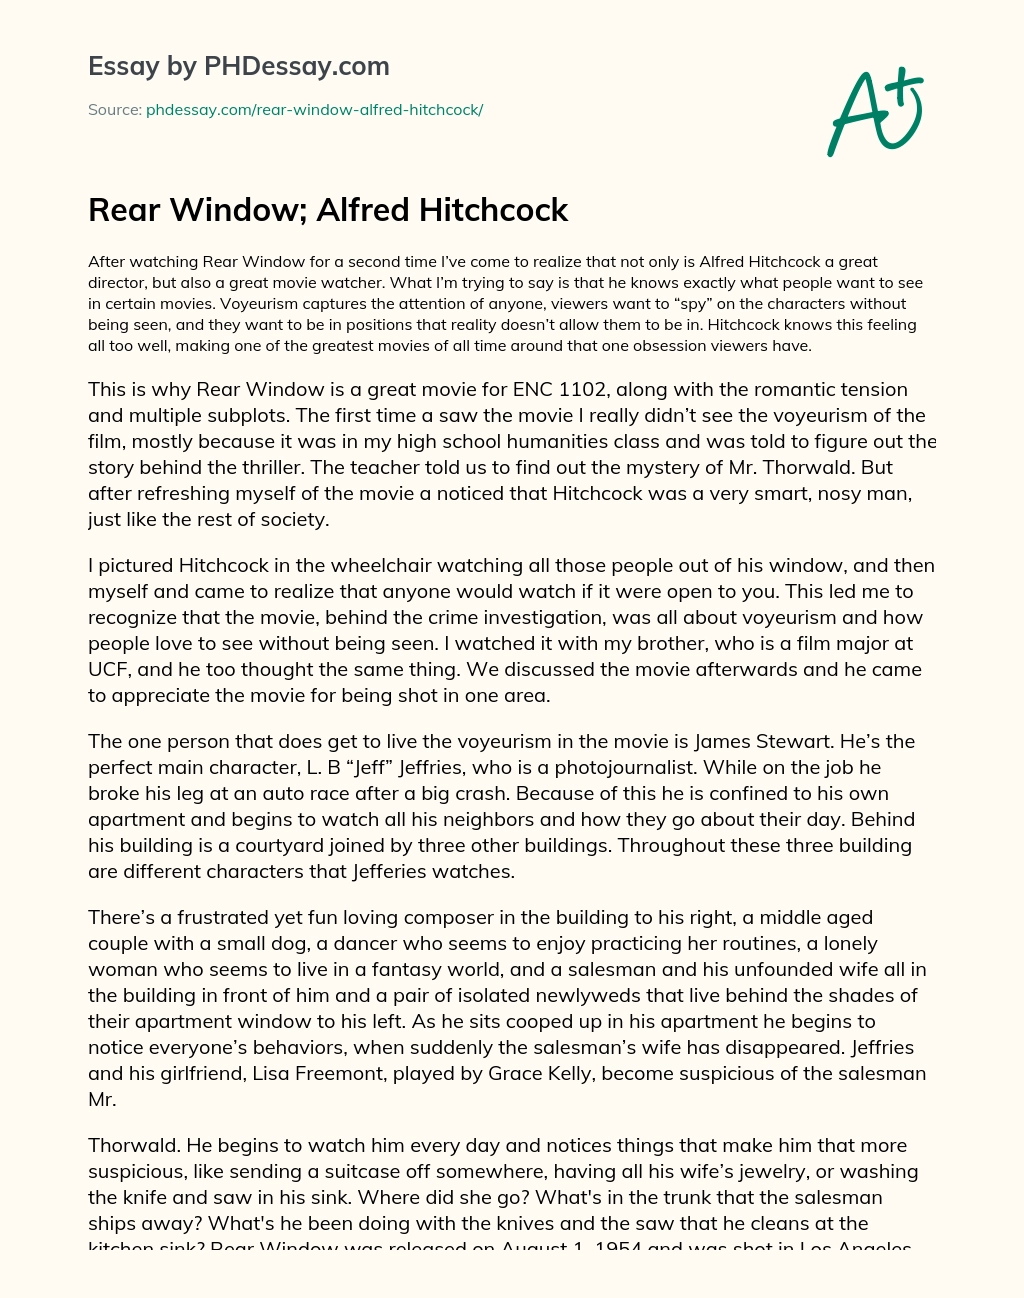 rear window voyeurism research paper